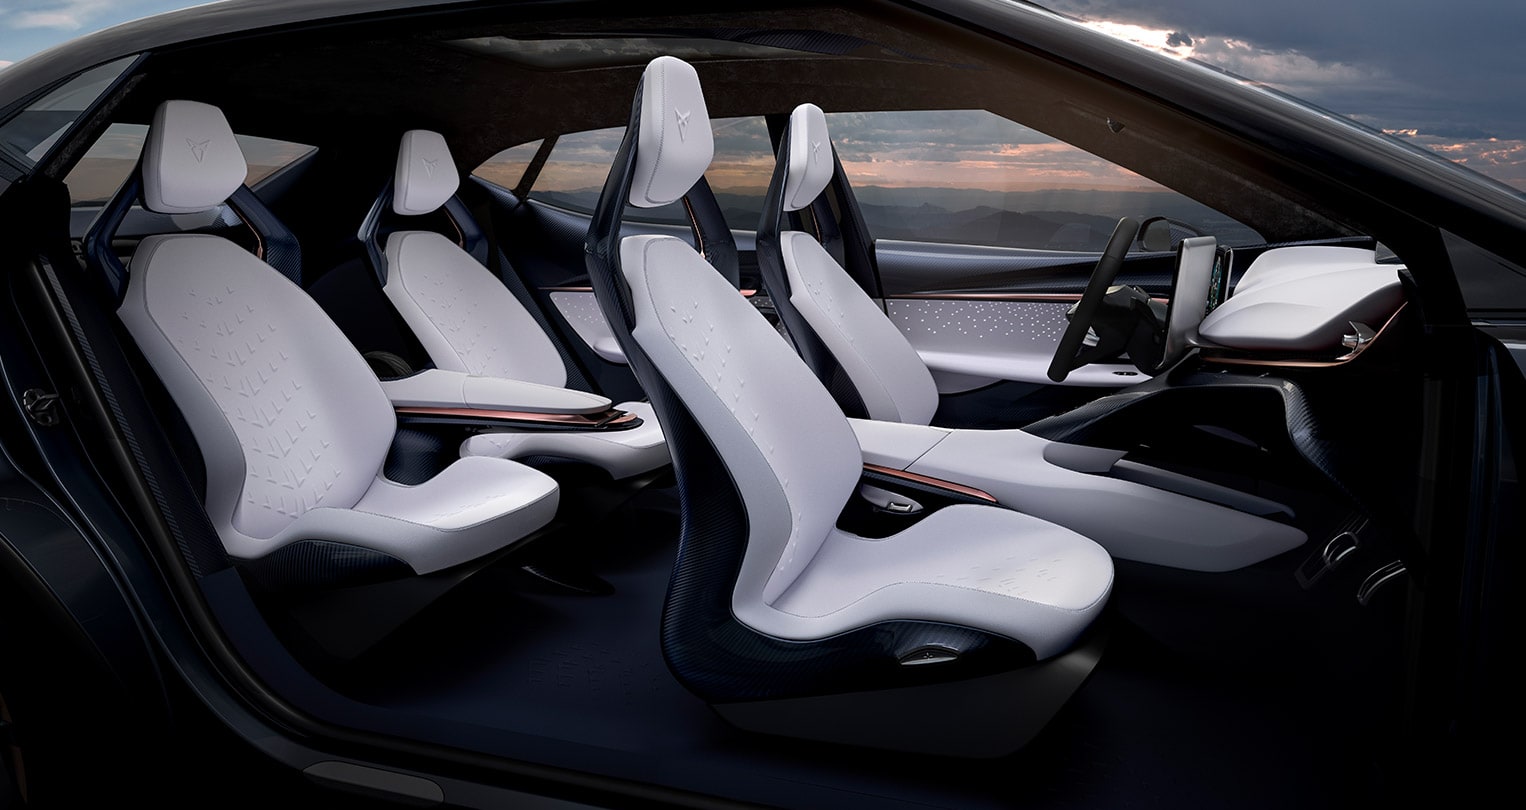 The CUPRA Tavascan concept car becomes a reality